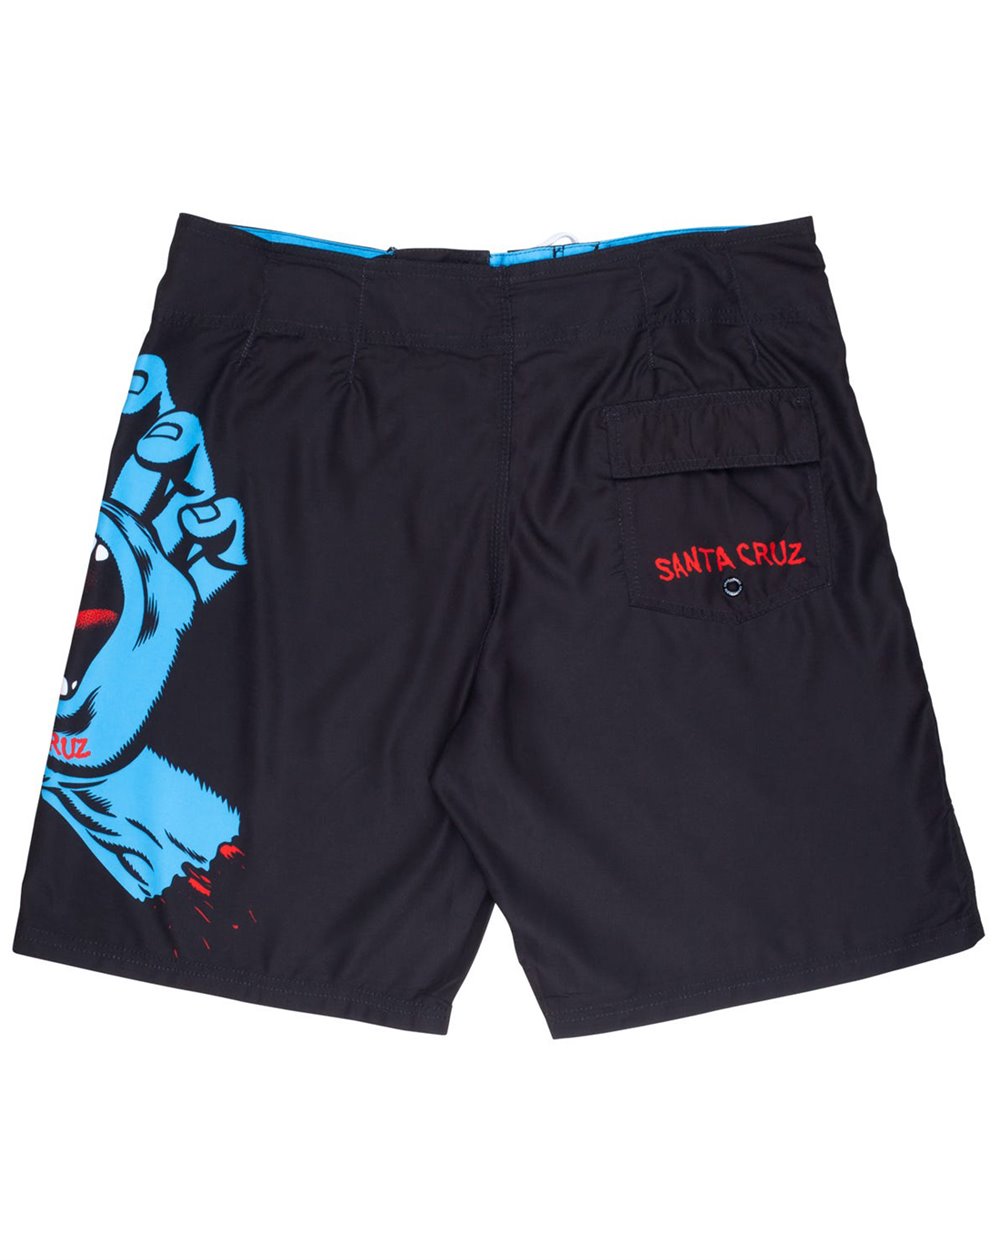 Screaming Hand Santa Cruz Board Shorts (Black) for Men